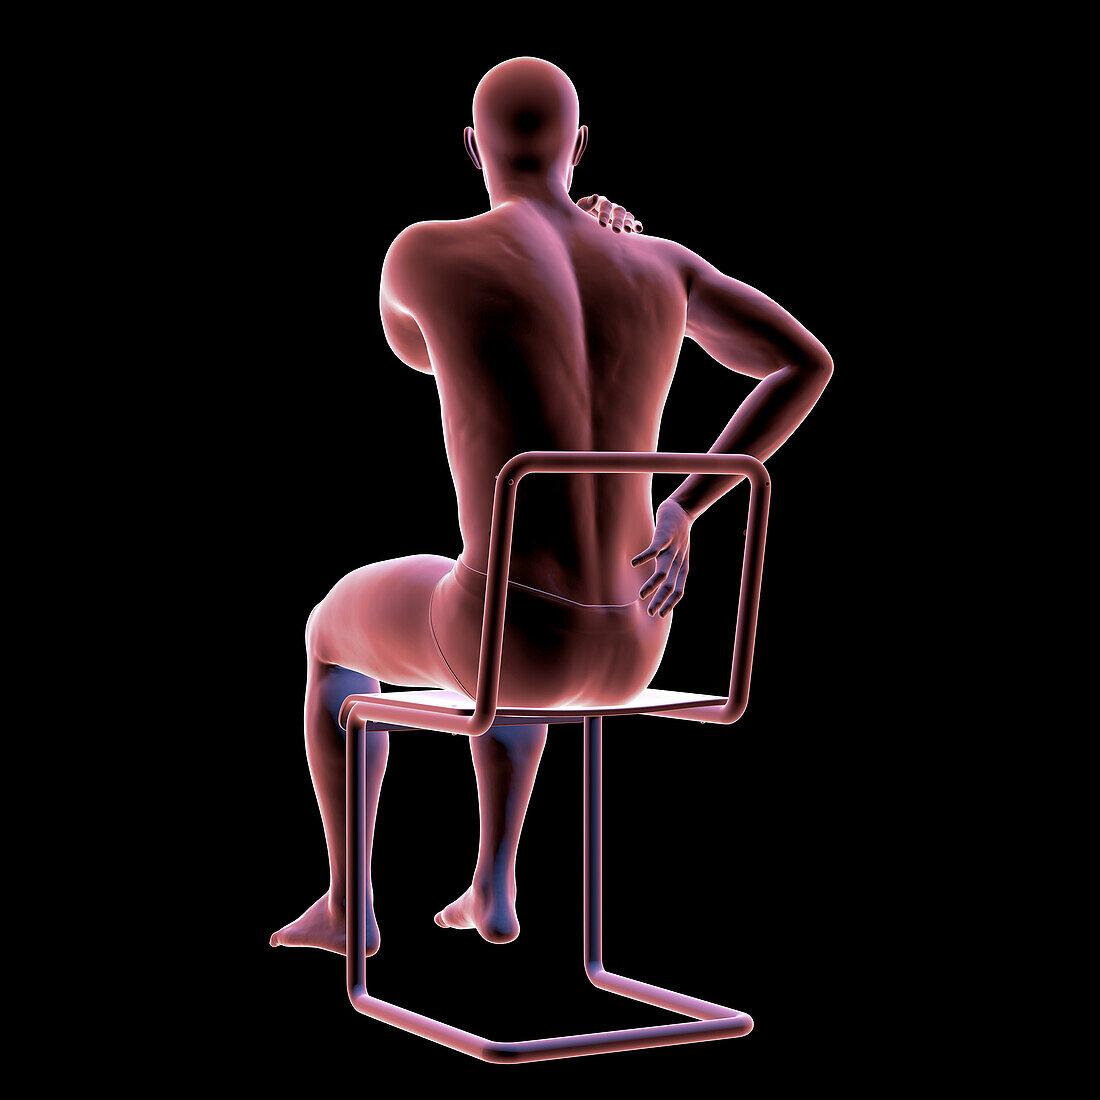 Back pain, conceptual illustration